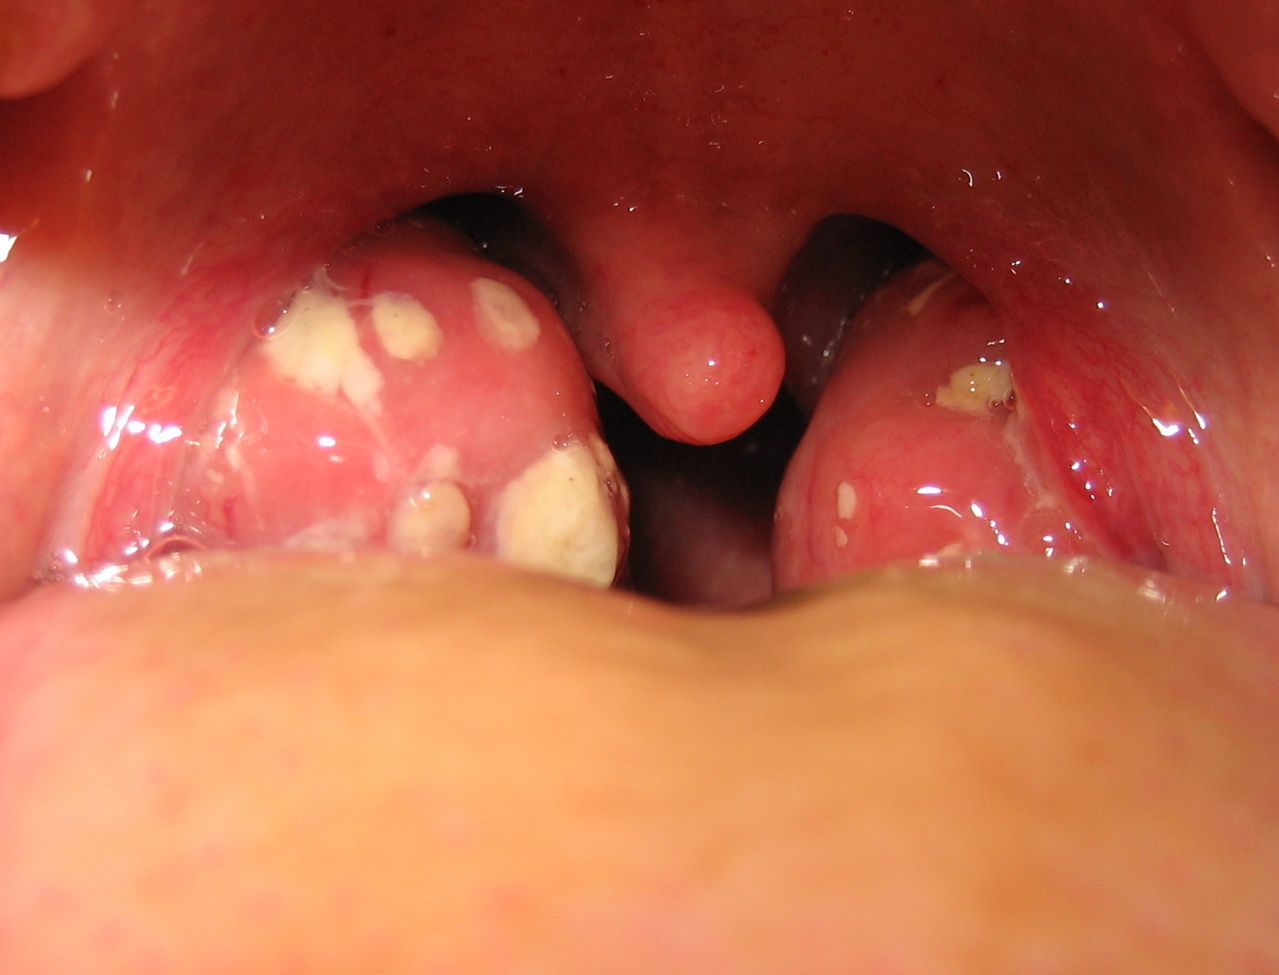 Inflamed Palatine Tonsils (Tonsillitis) SimpleMed